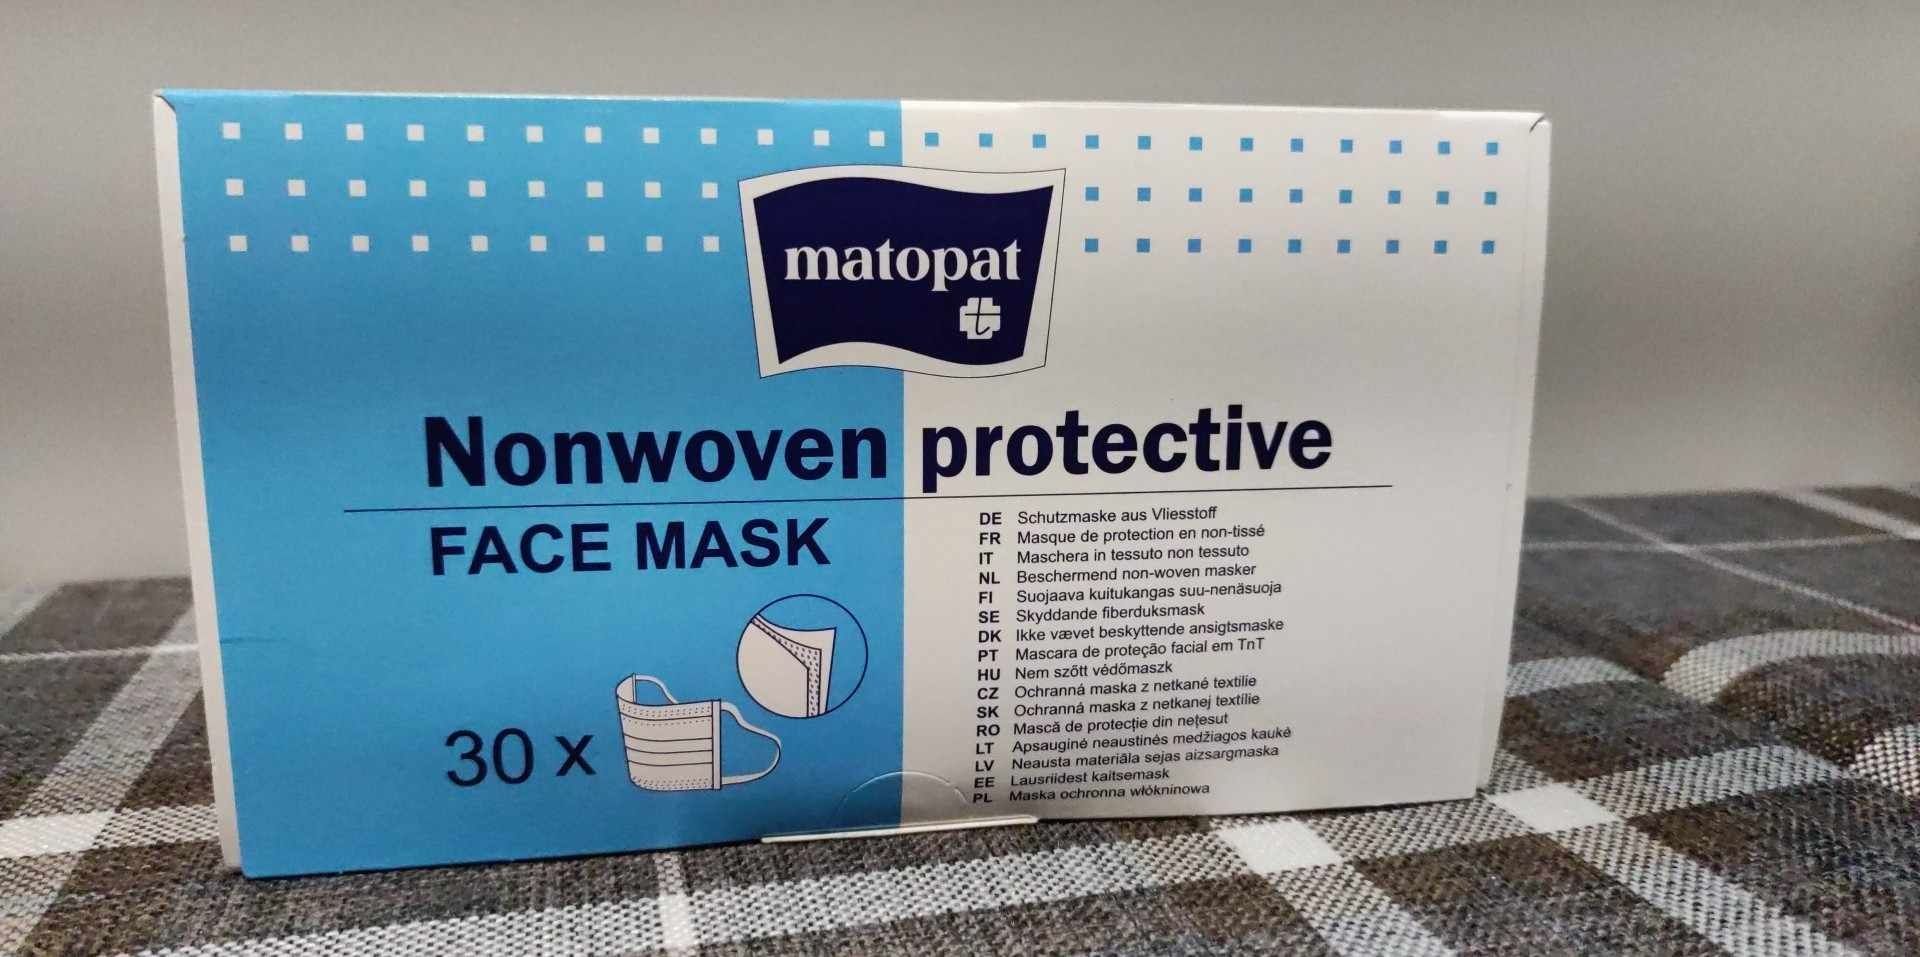 Face mask maseczki higieniczne matopat zestaw 30 szt